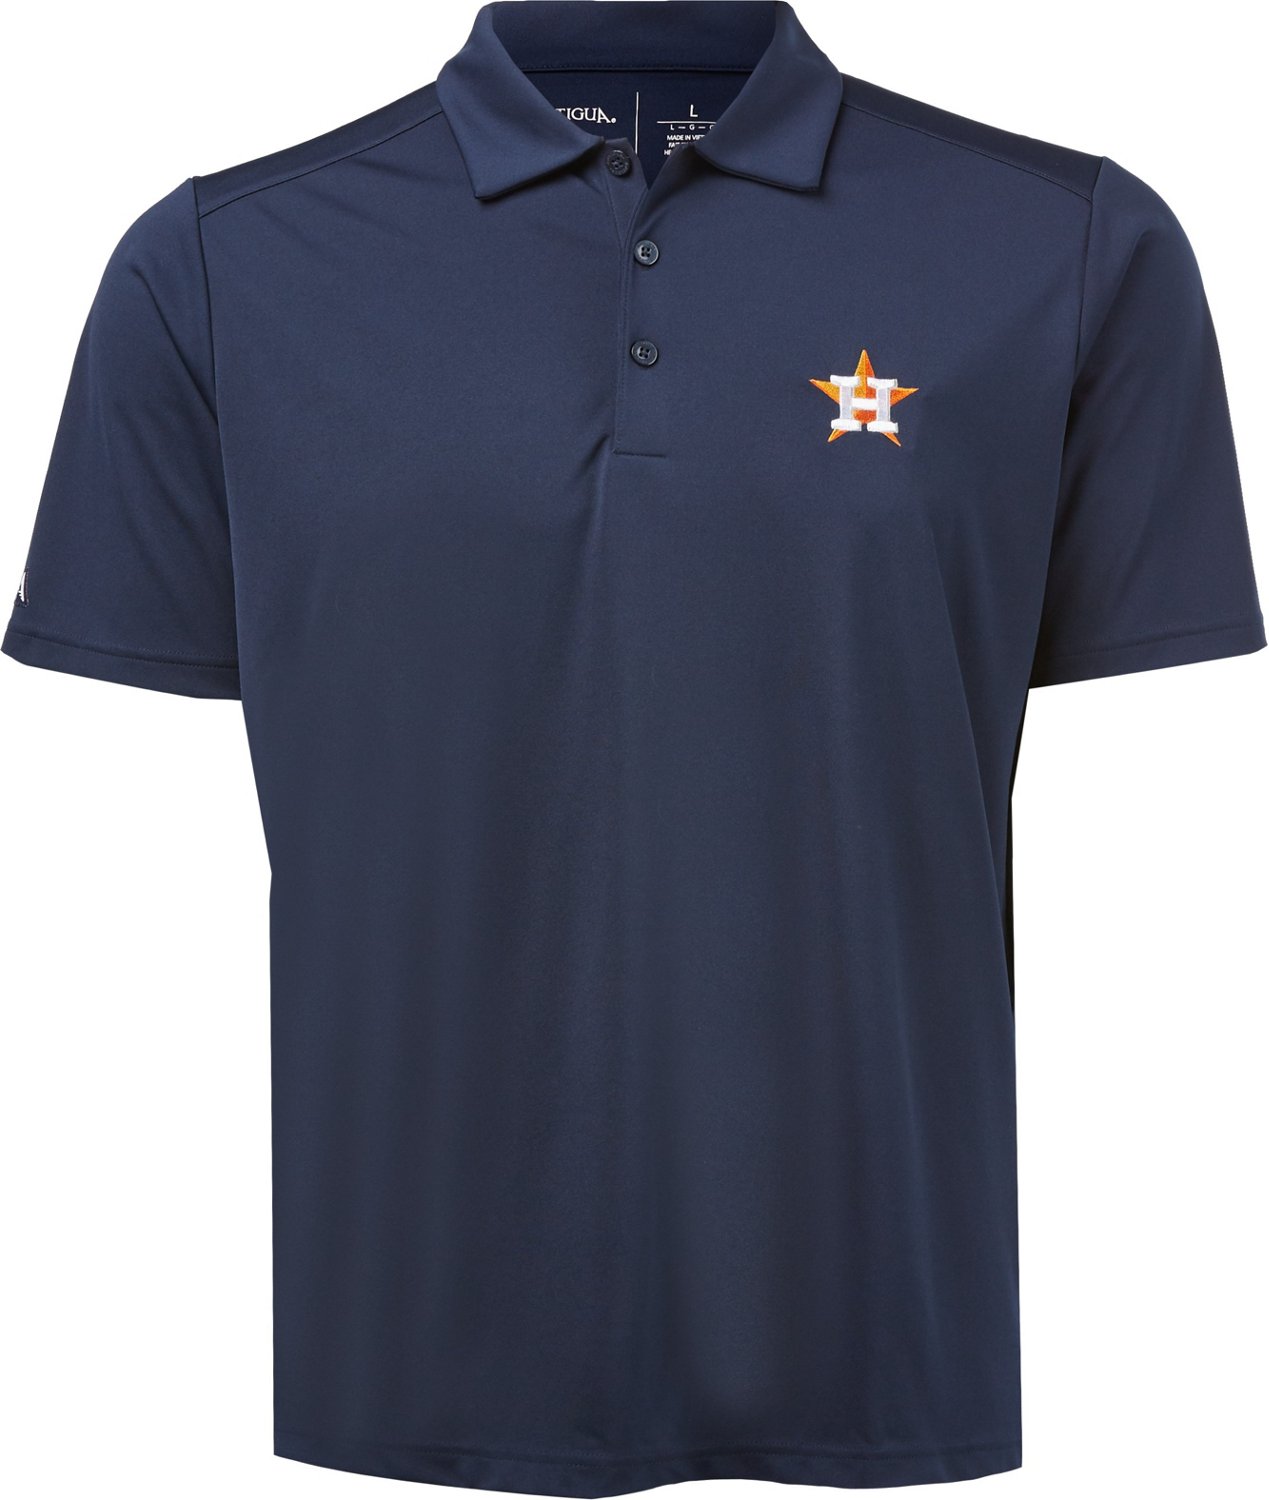 Houston Astros Polo, Astros Polos, Golf Shirts